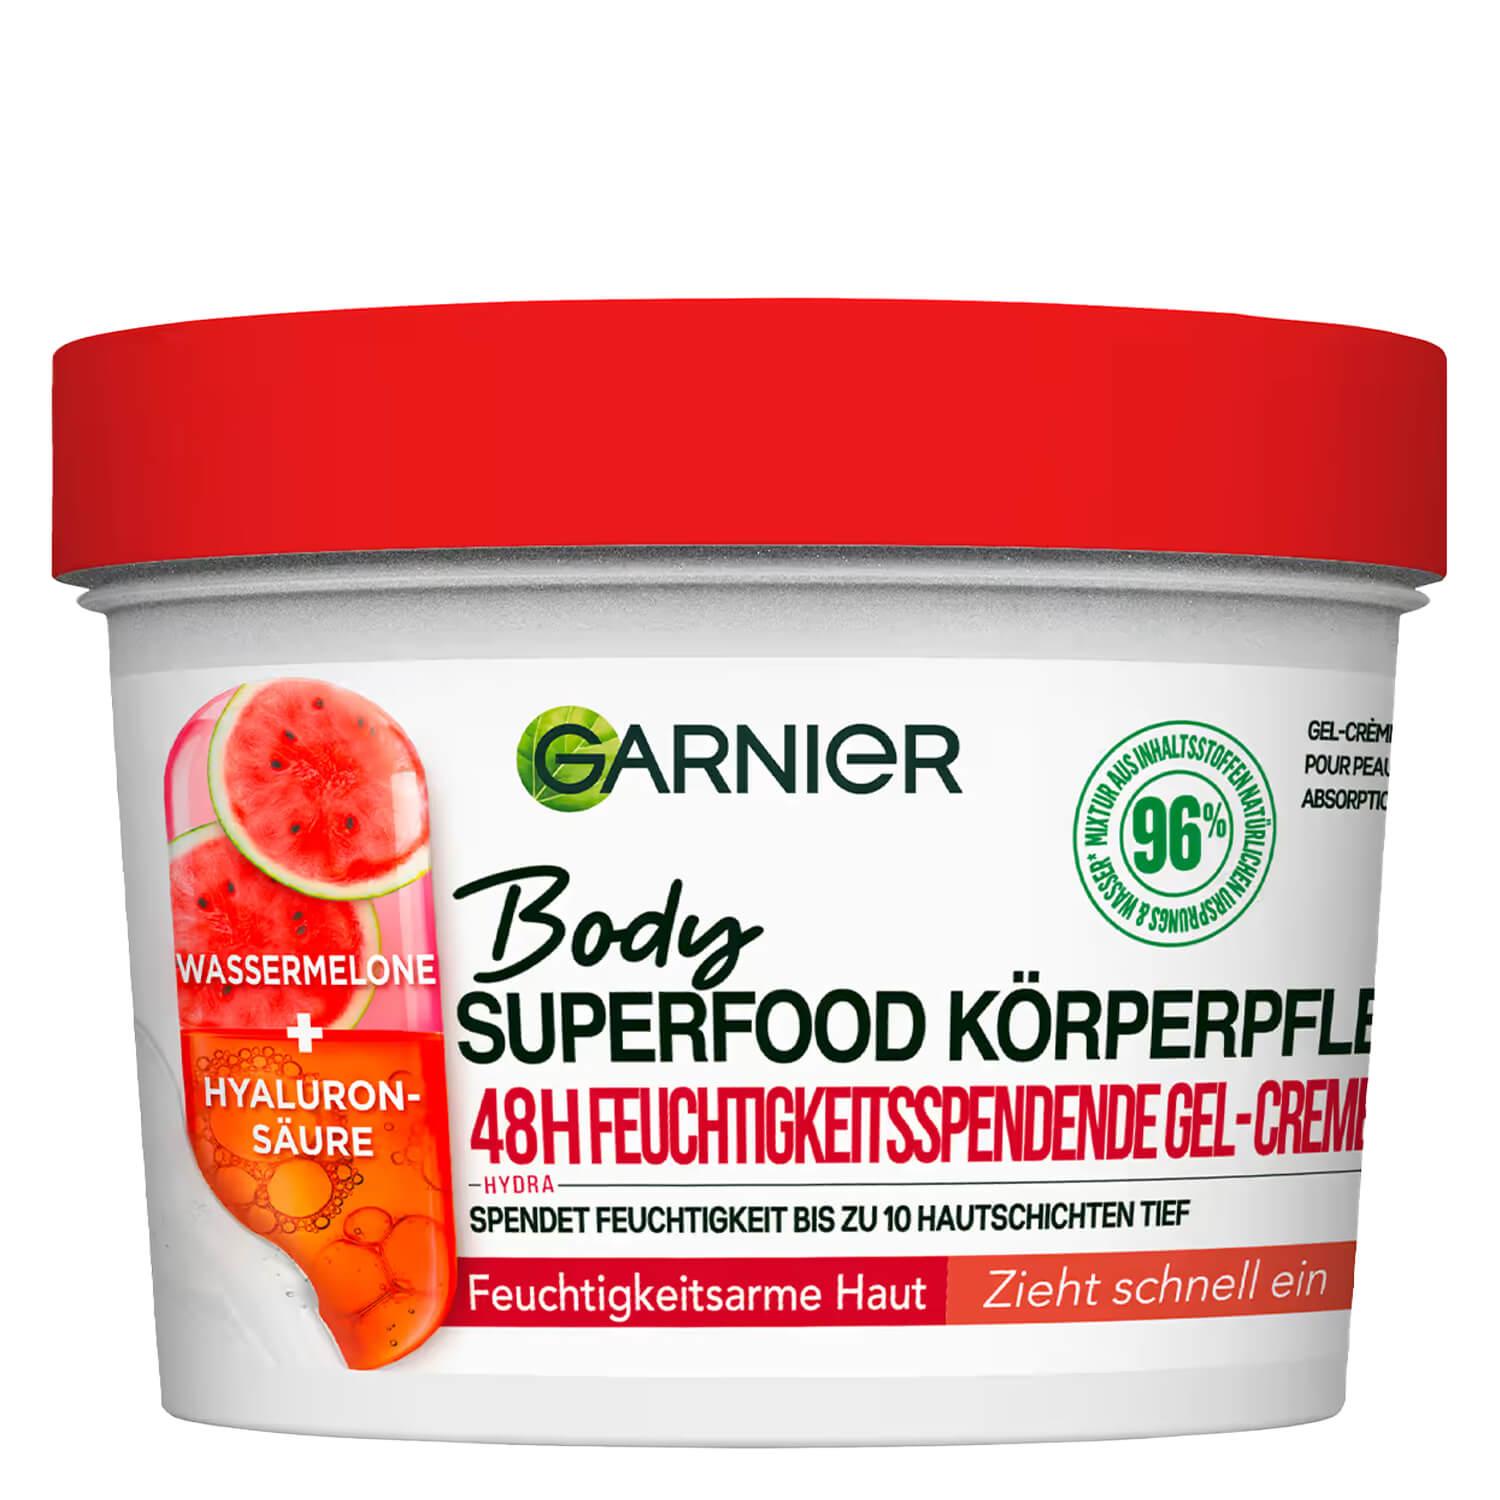 Skinactive Body - Body Superfood 48H Gel-Creme Wassermelone & Hyaluronsäure